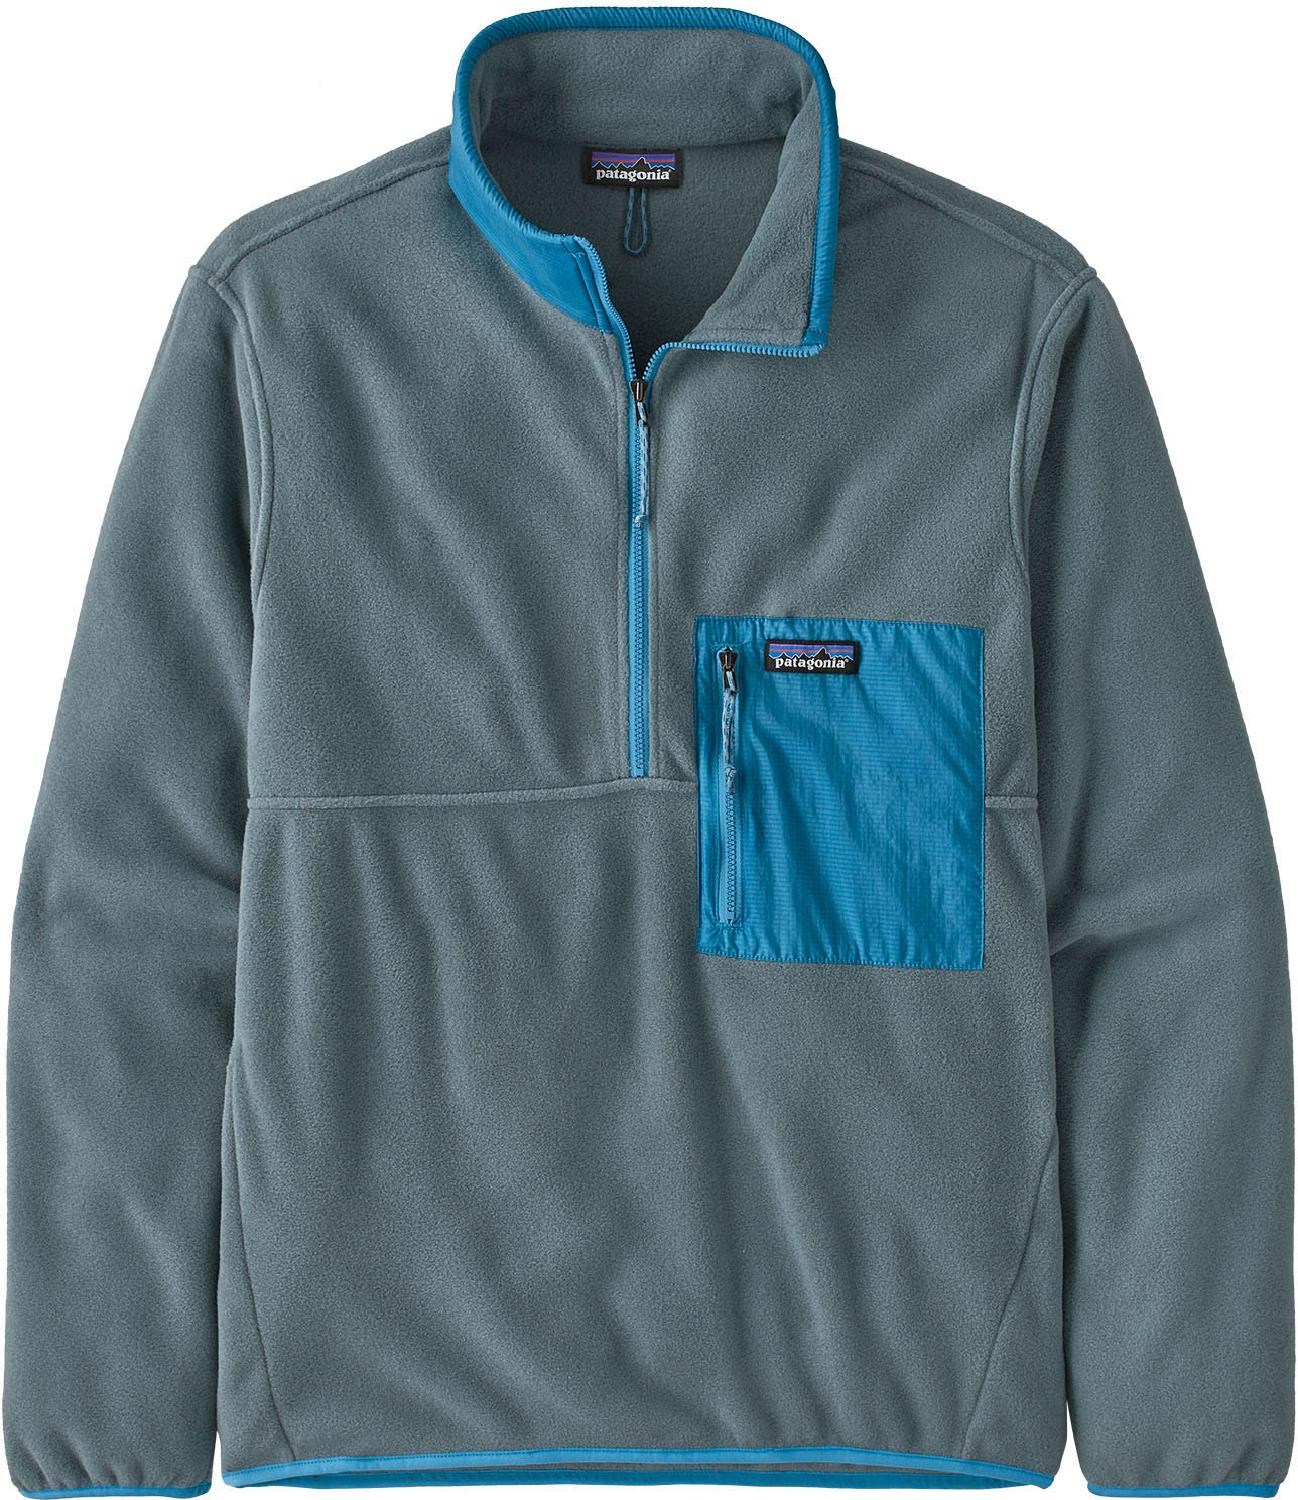 Пуловер Microdini с молнией до половины - мужской Patagonia, серый